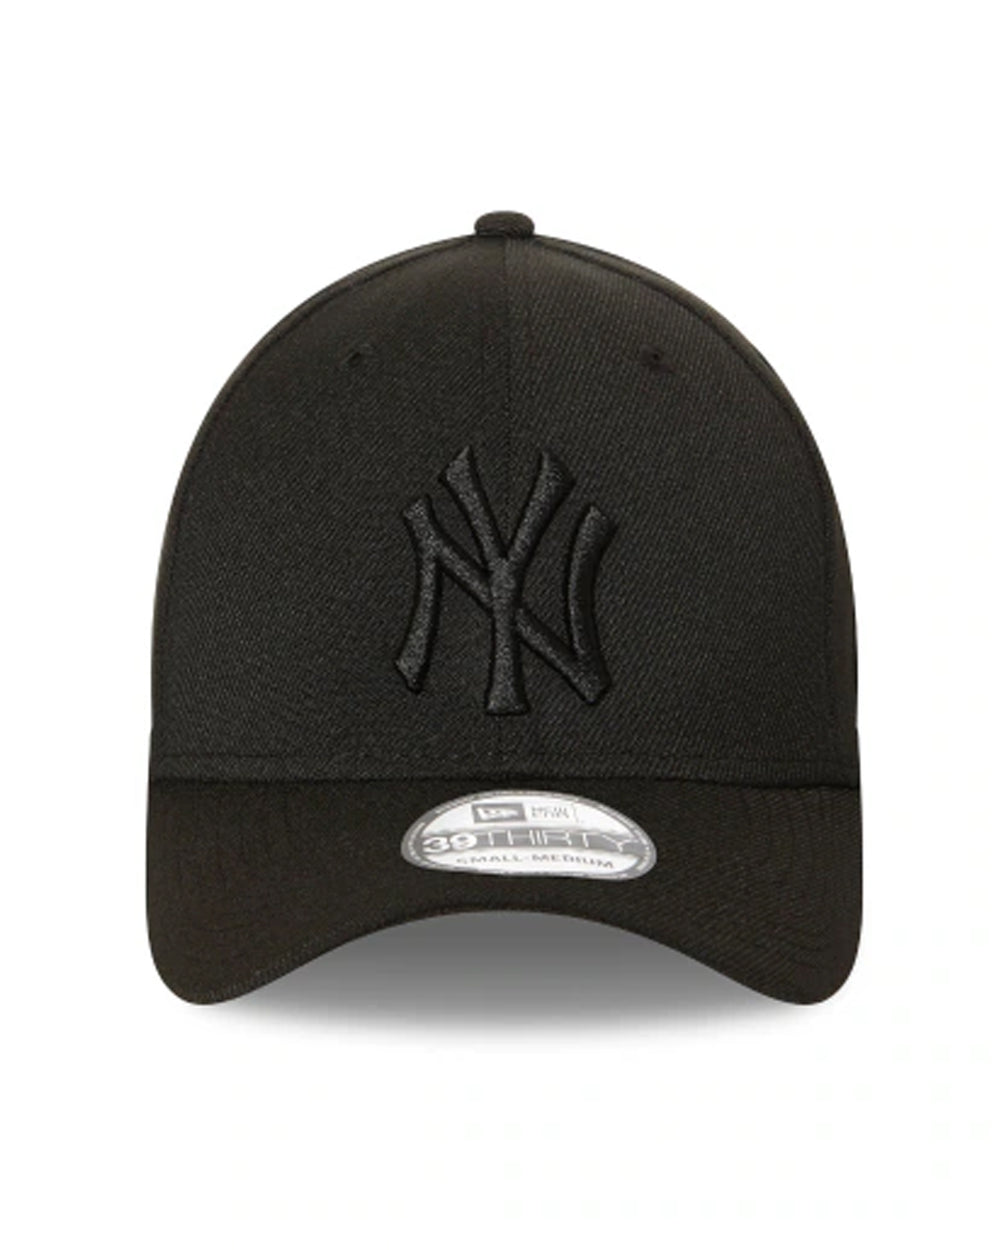 New York Yankees Black on Black 39THIRTY Stretch Fit